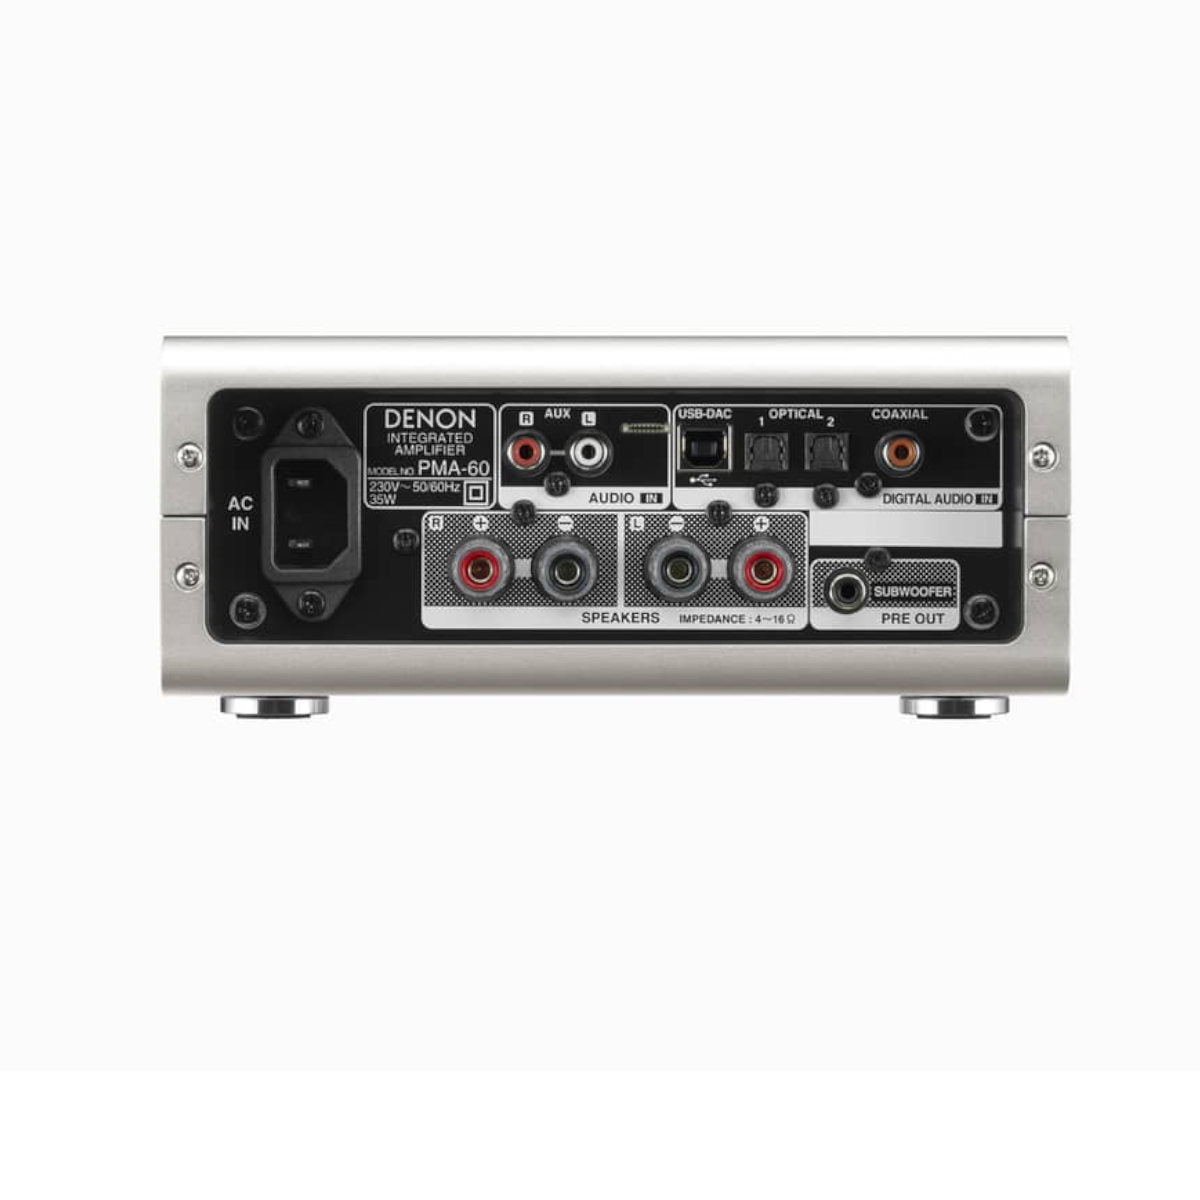 Denon PMA-60 Digital Integrated Stereo Amplifier 